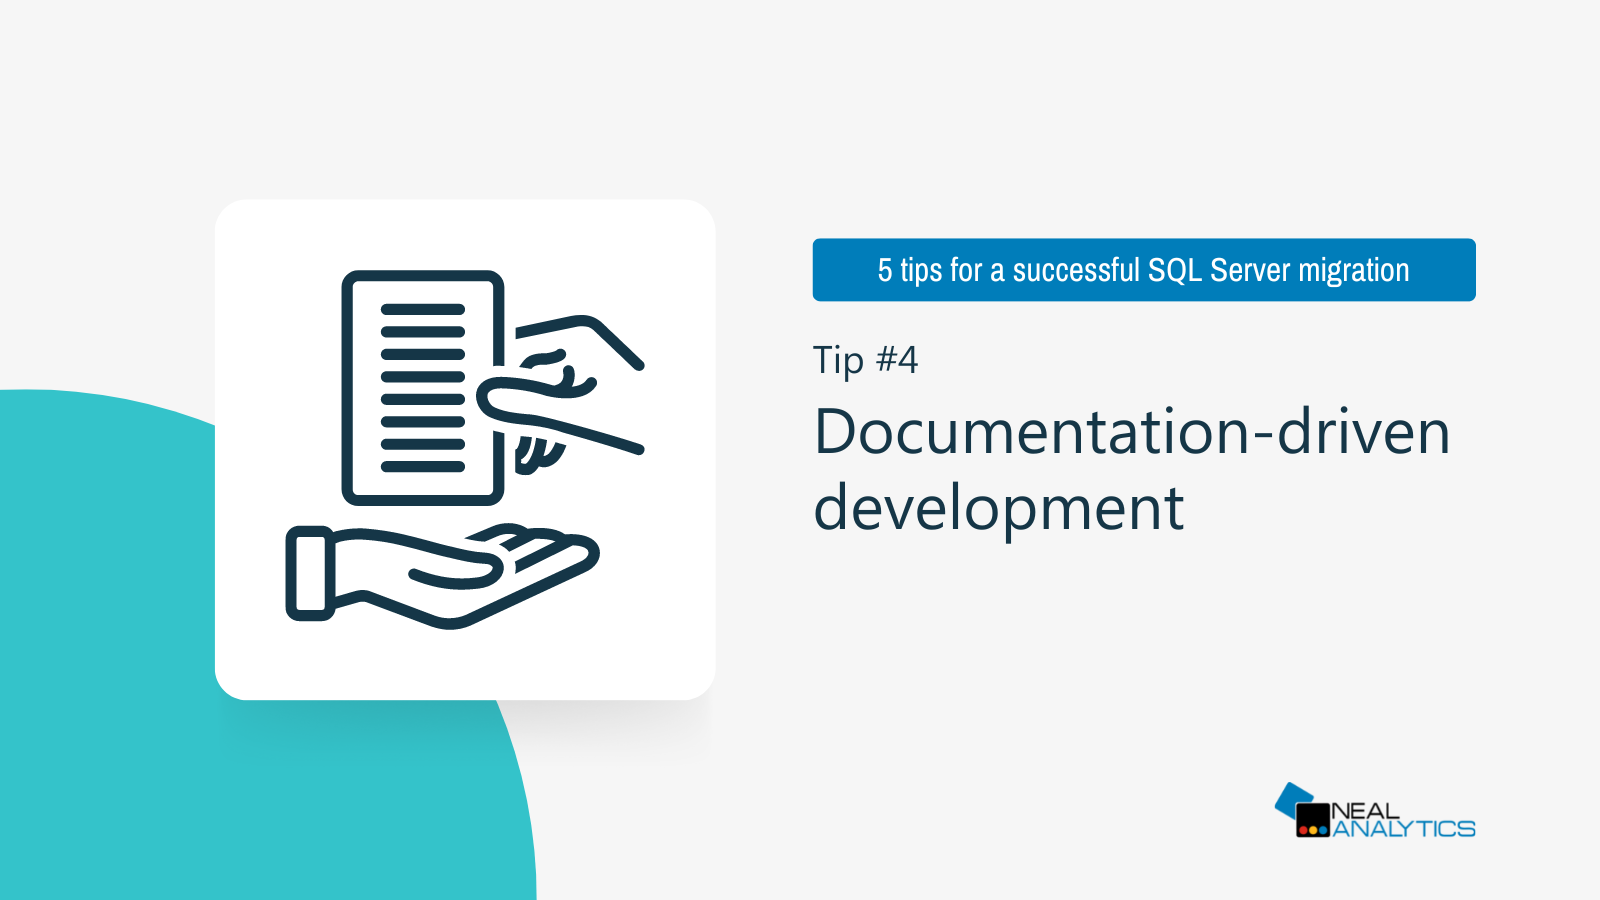 SQL Server migration tip 4: Documentation-driven development